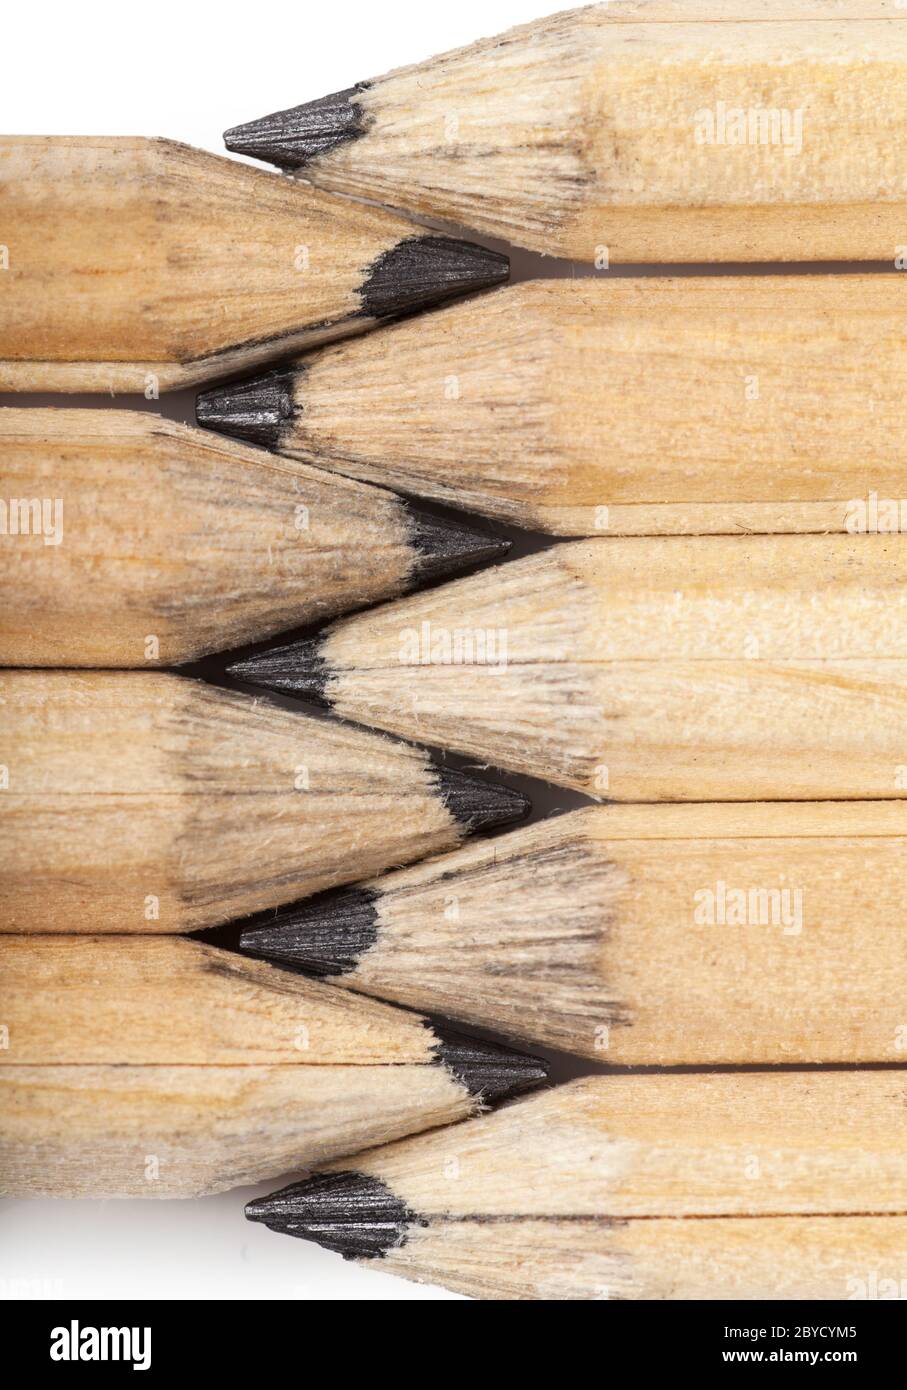 Lead pencils Stock Photo